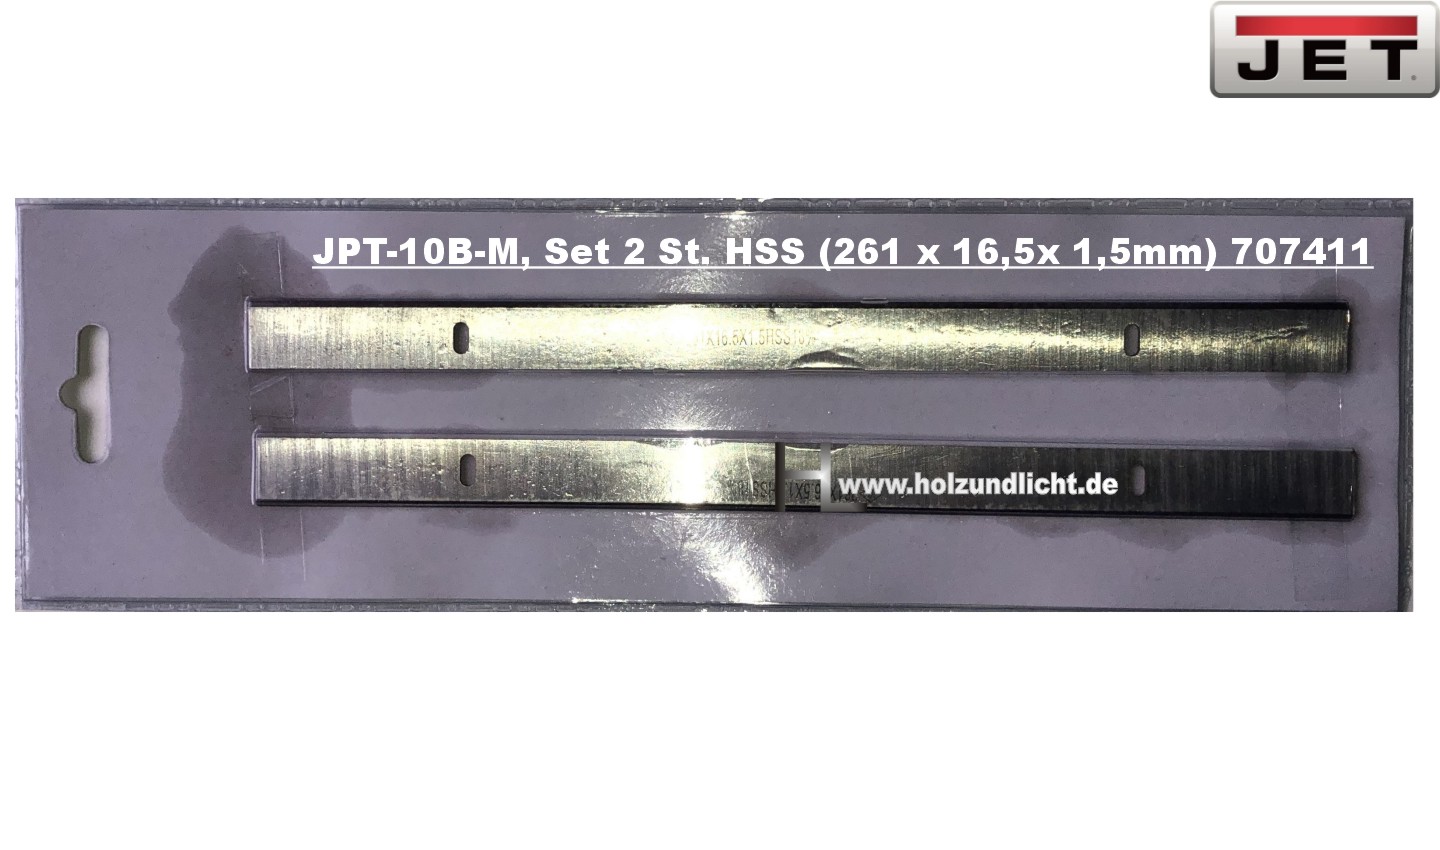 JET Ersatzhobelmesser für JPT-10B-M, Set 2 St. HSS 707411_*2879